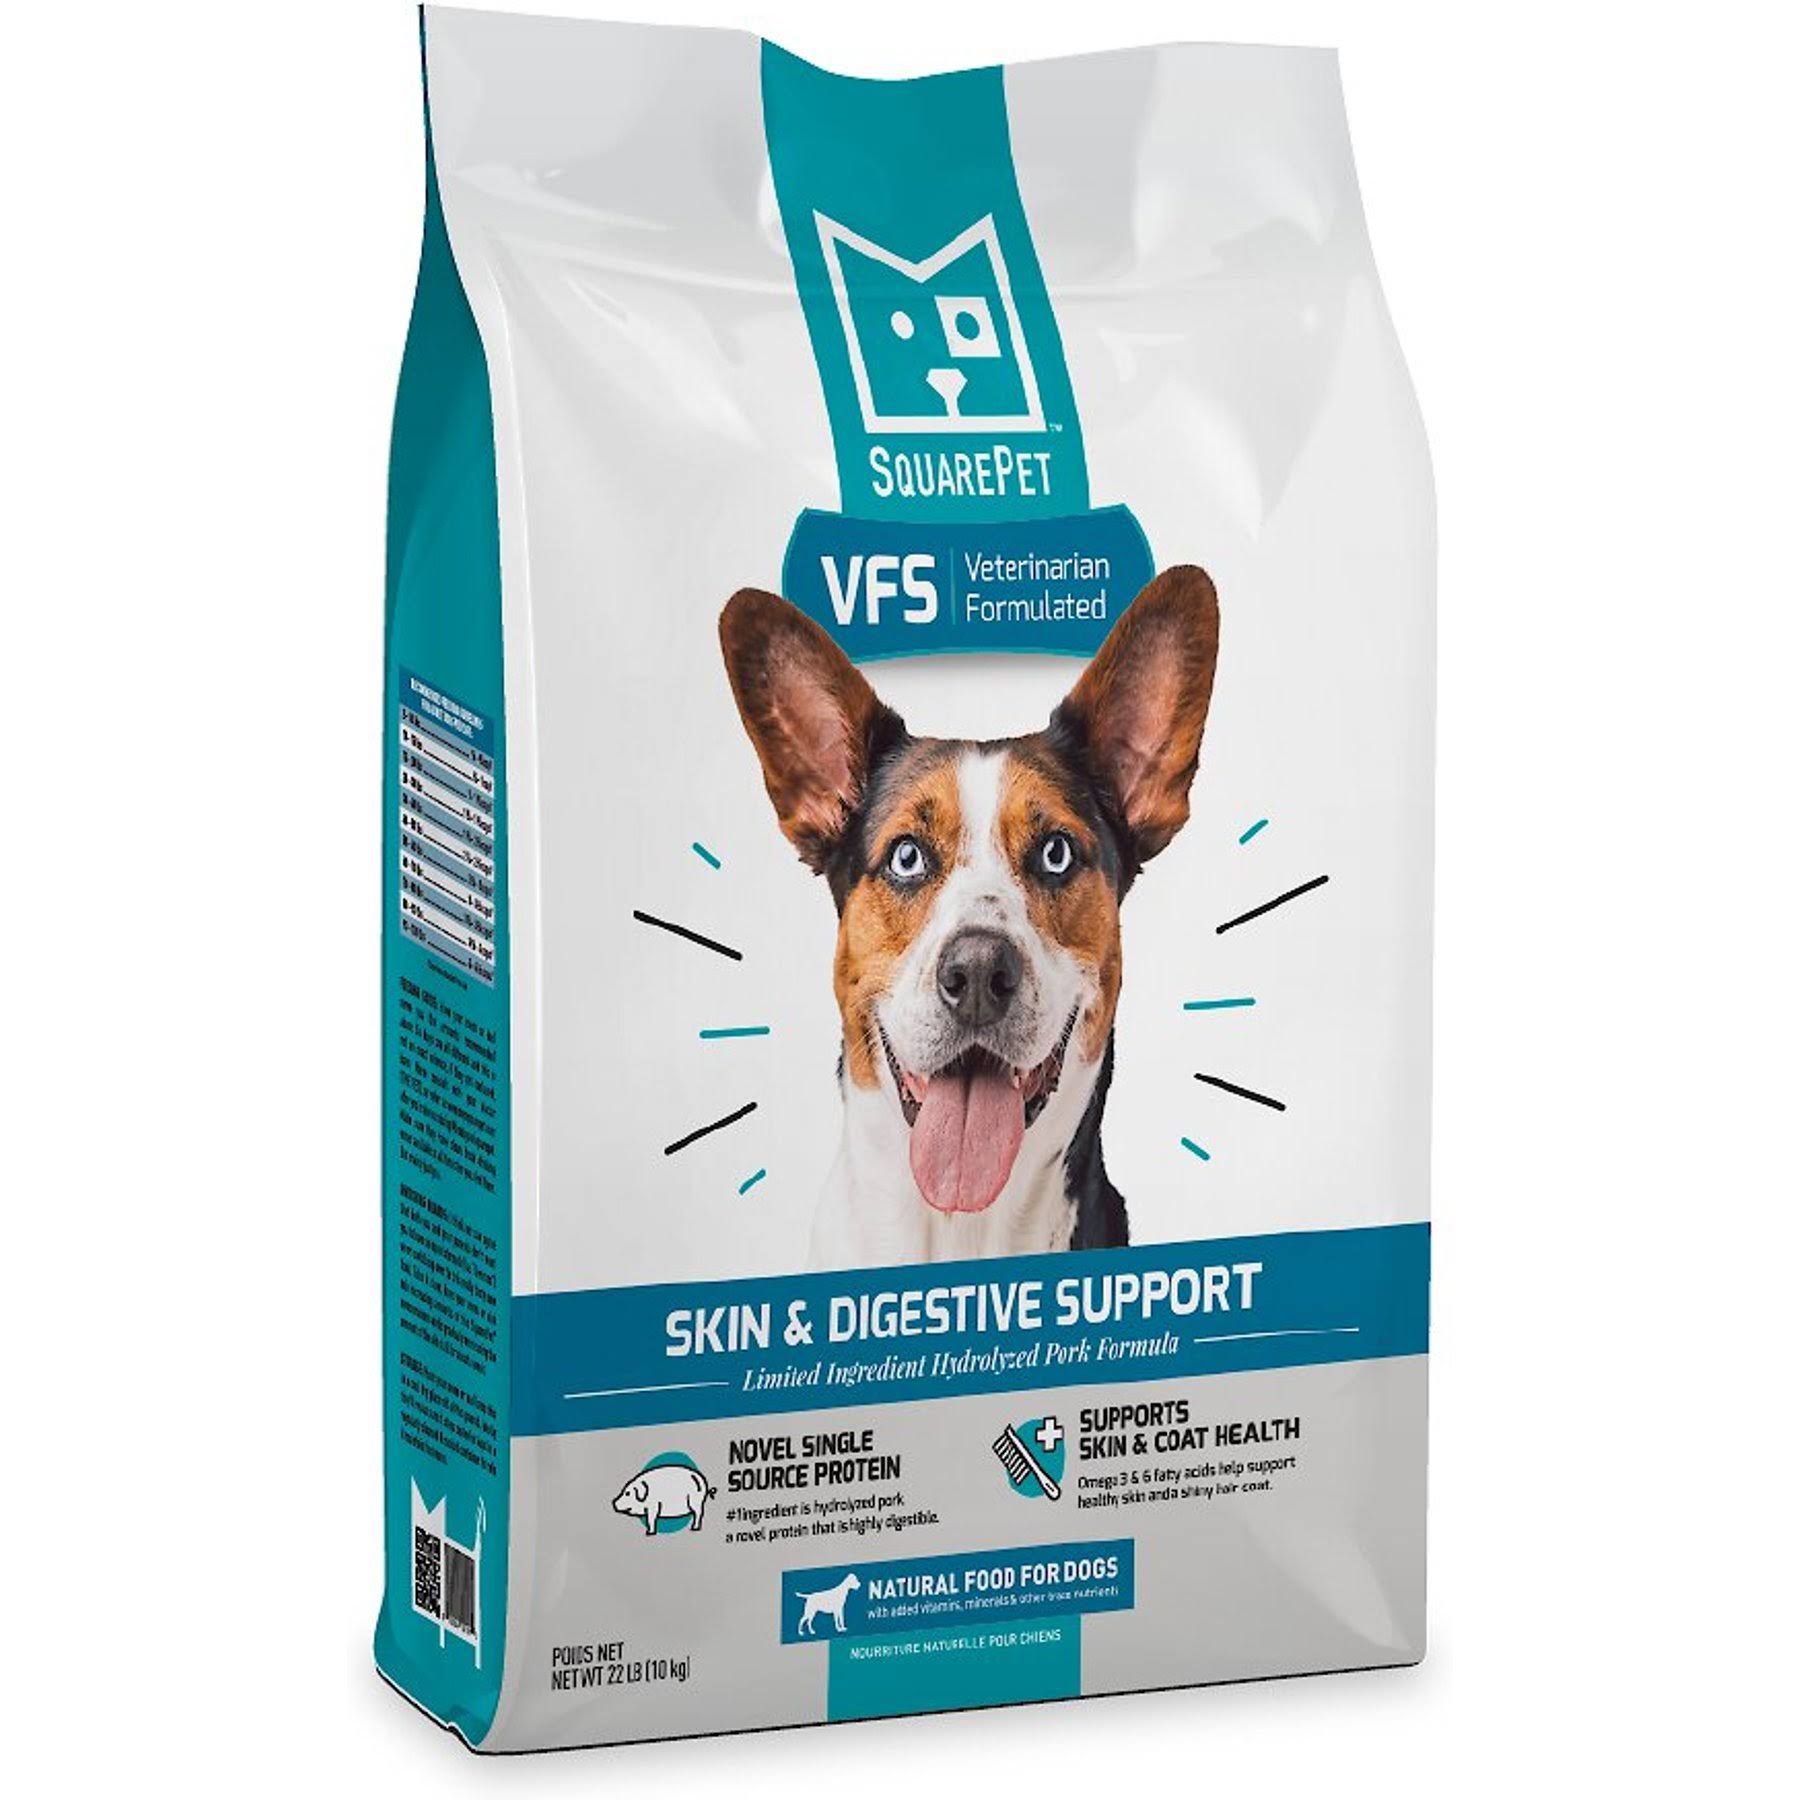 SquarePet VFS Skin & Digestive Support Dry Dog Food 22lbs